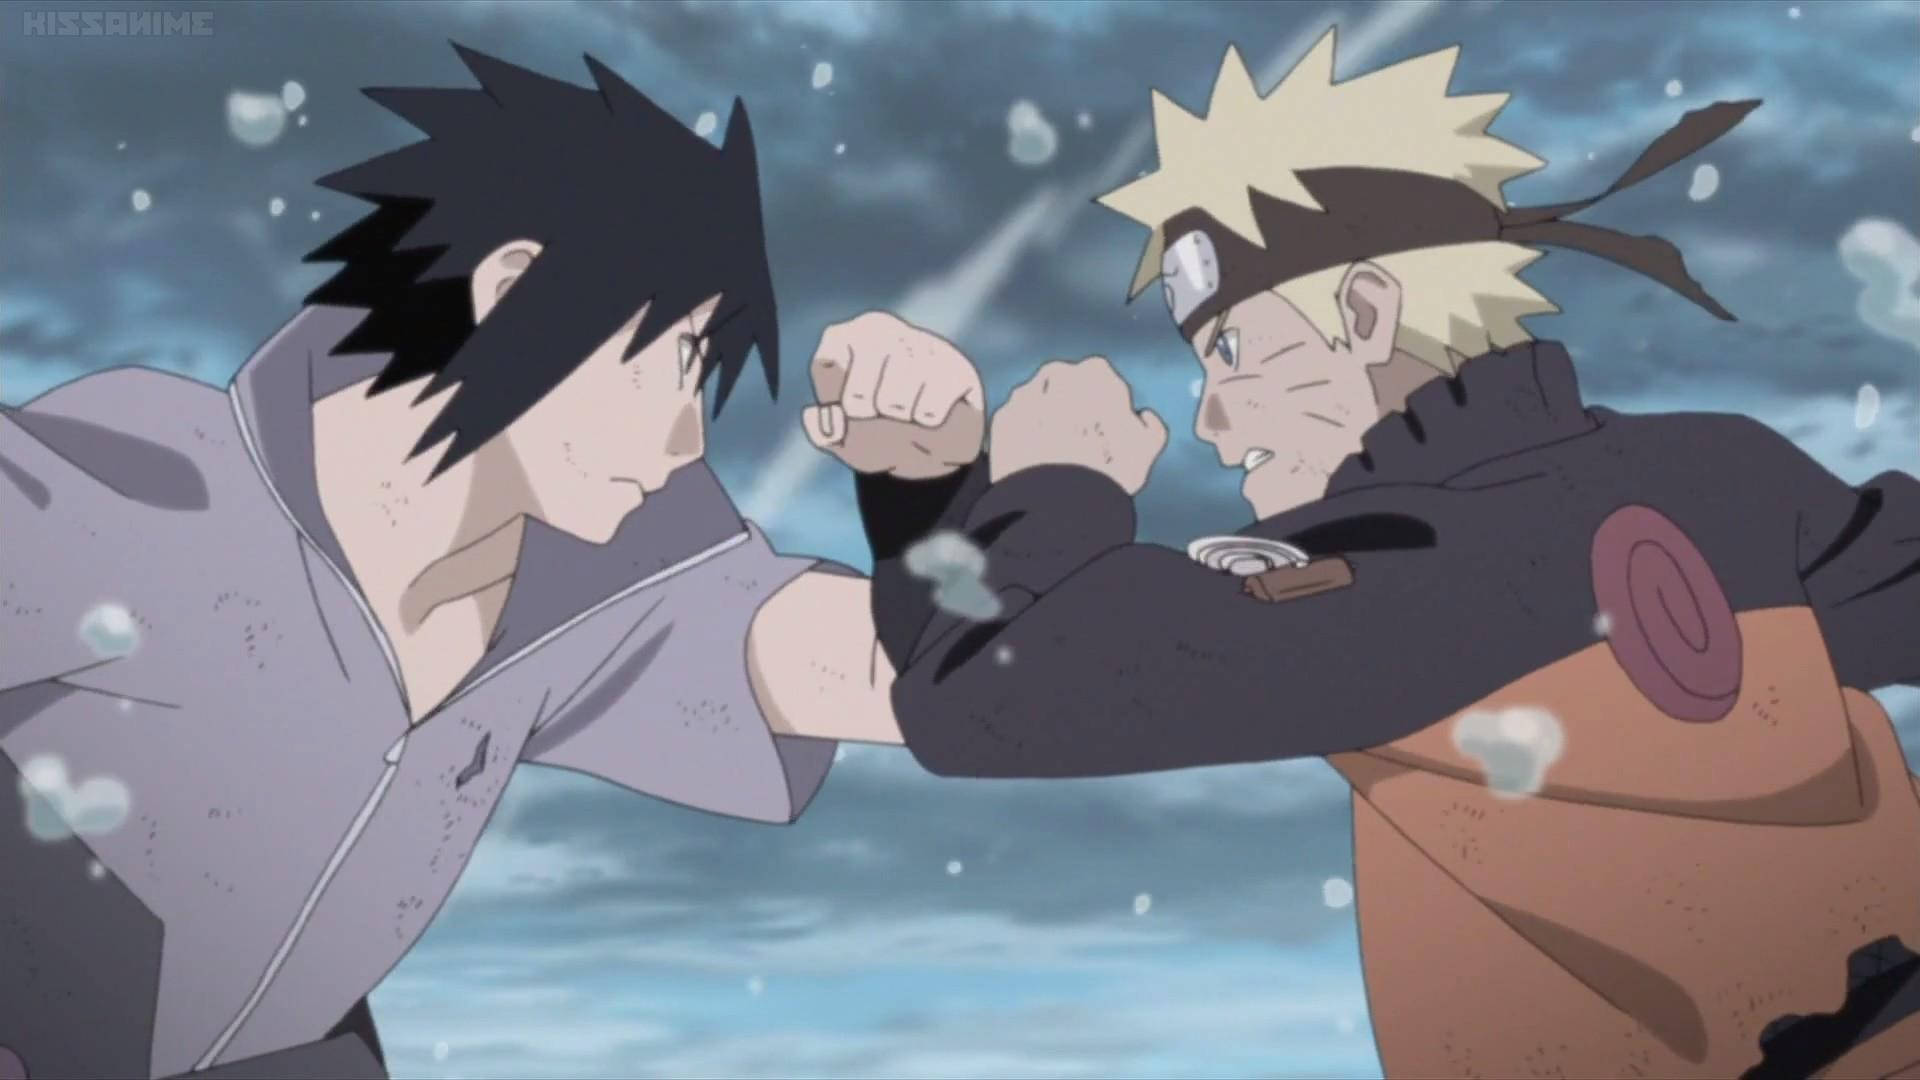 Aesthetic Sasuke Fight With Naruto Background